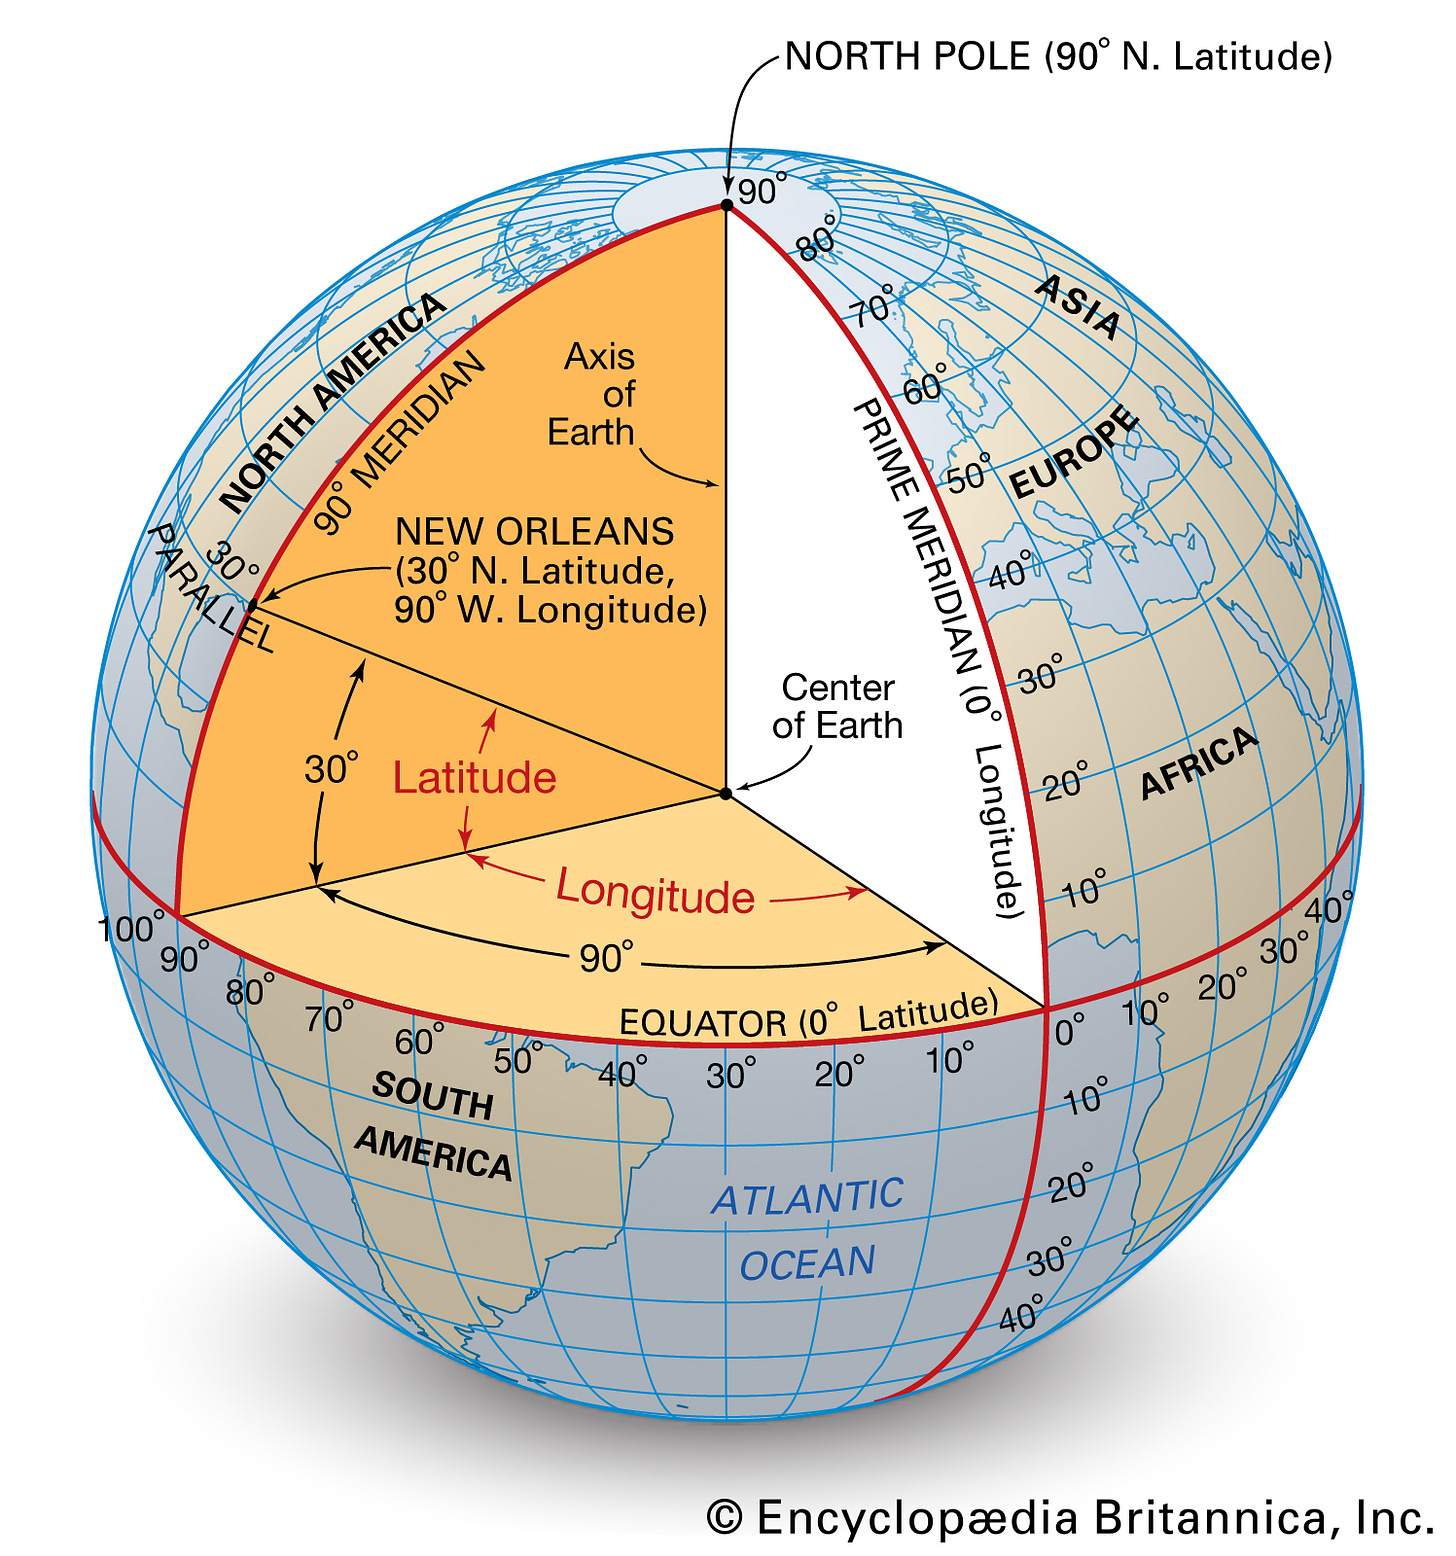 Latitude and longitude cut away drawing (Image: Britannica.com)